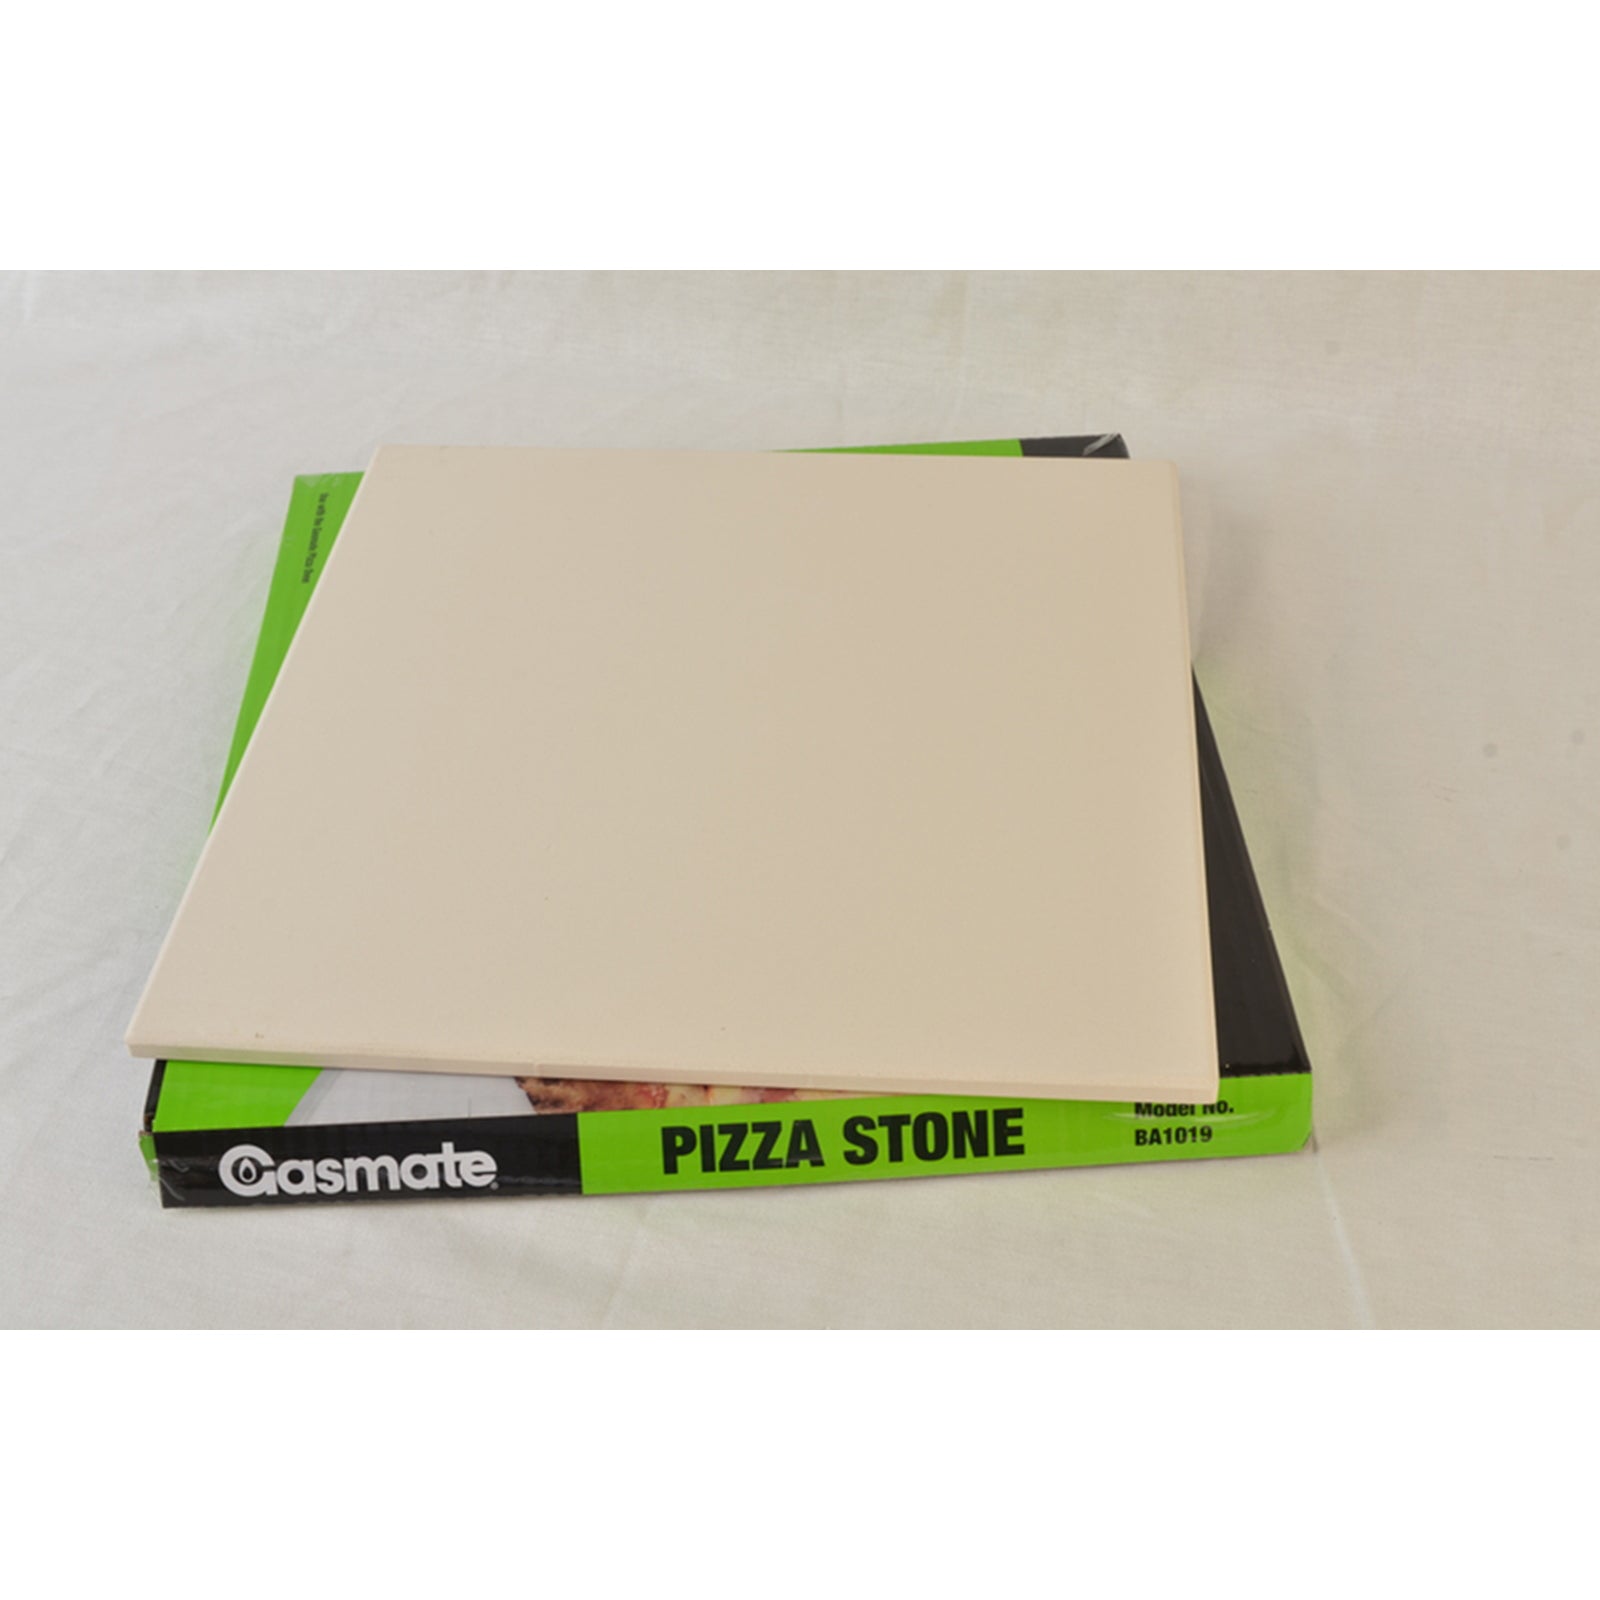 Gasmate - Pizza Oven Ceramic Food Grade Stone